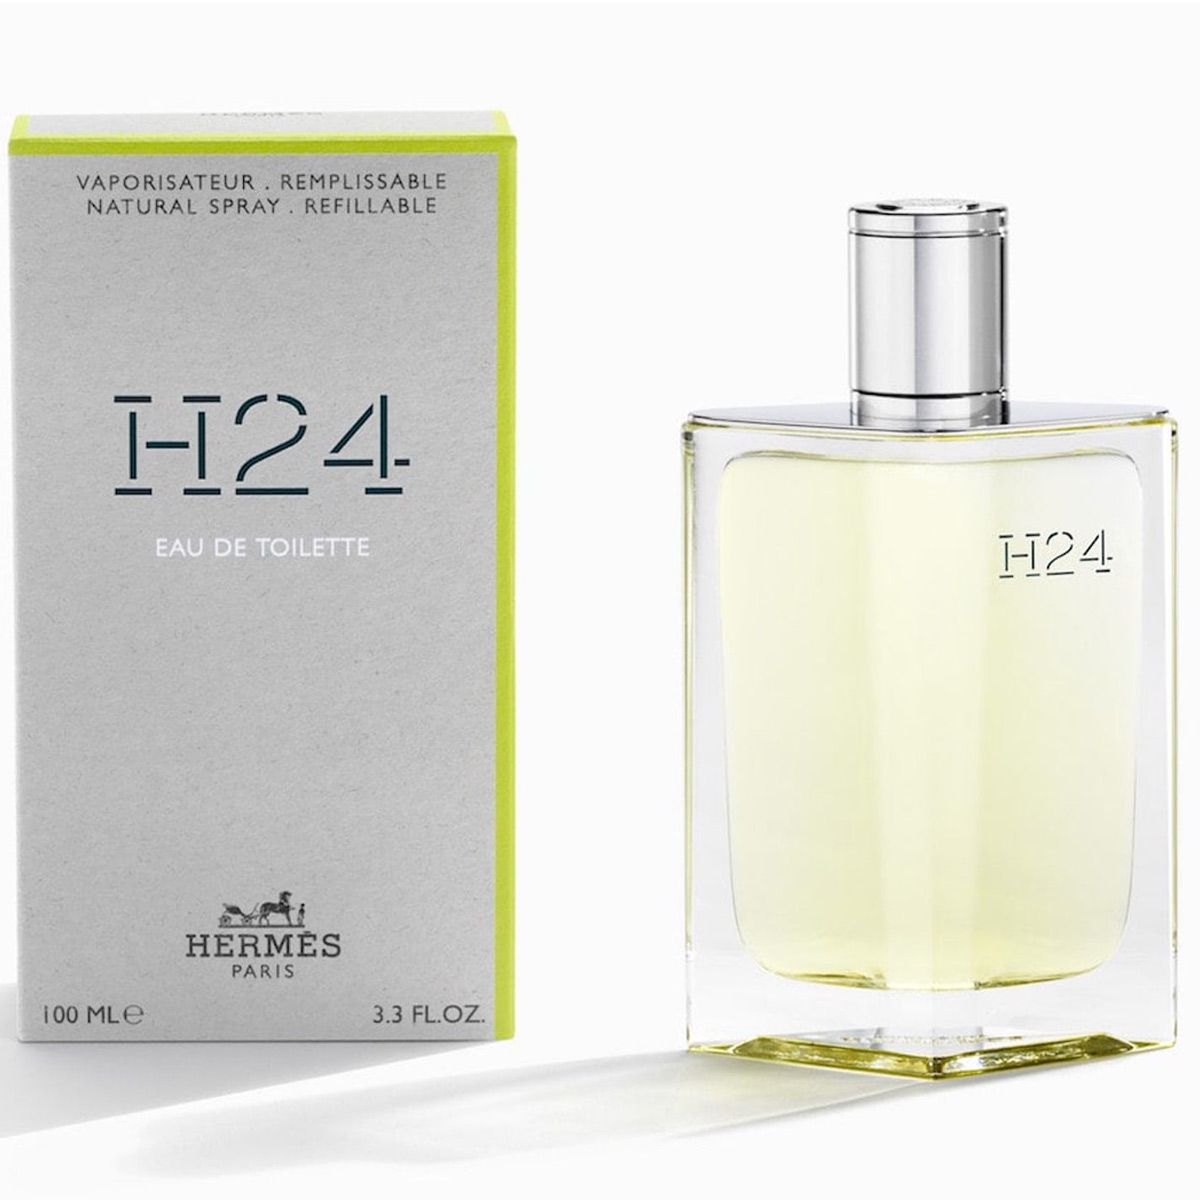  Hermès H24 